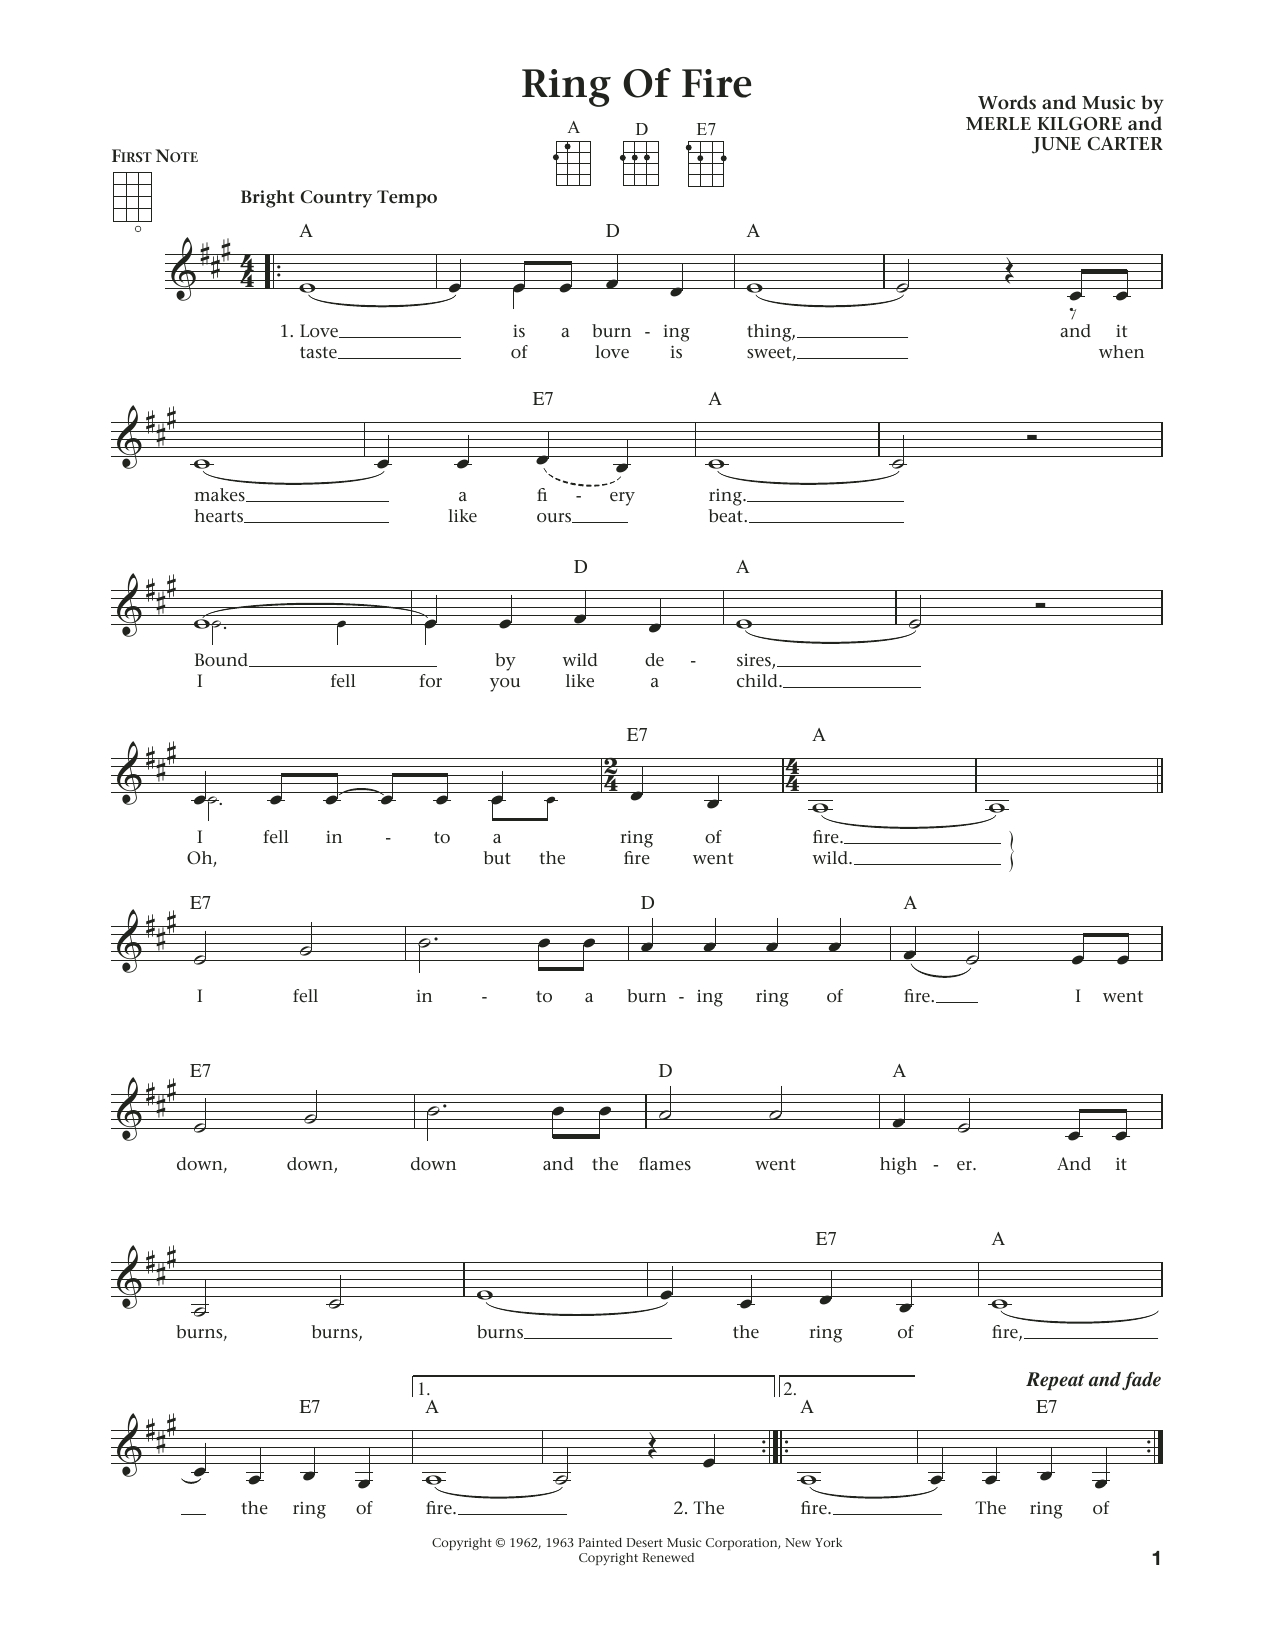 Ring Of Fire Chords Sheet Music Digital Files To Print Licensed June Carter Digital